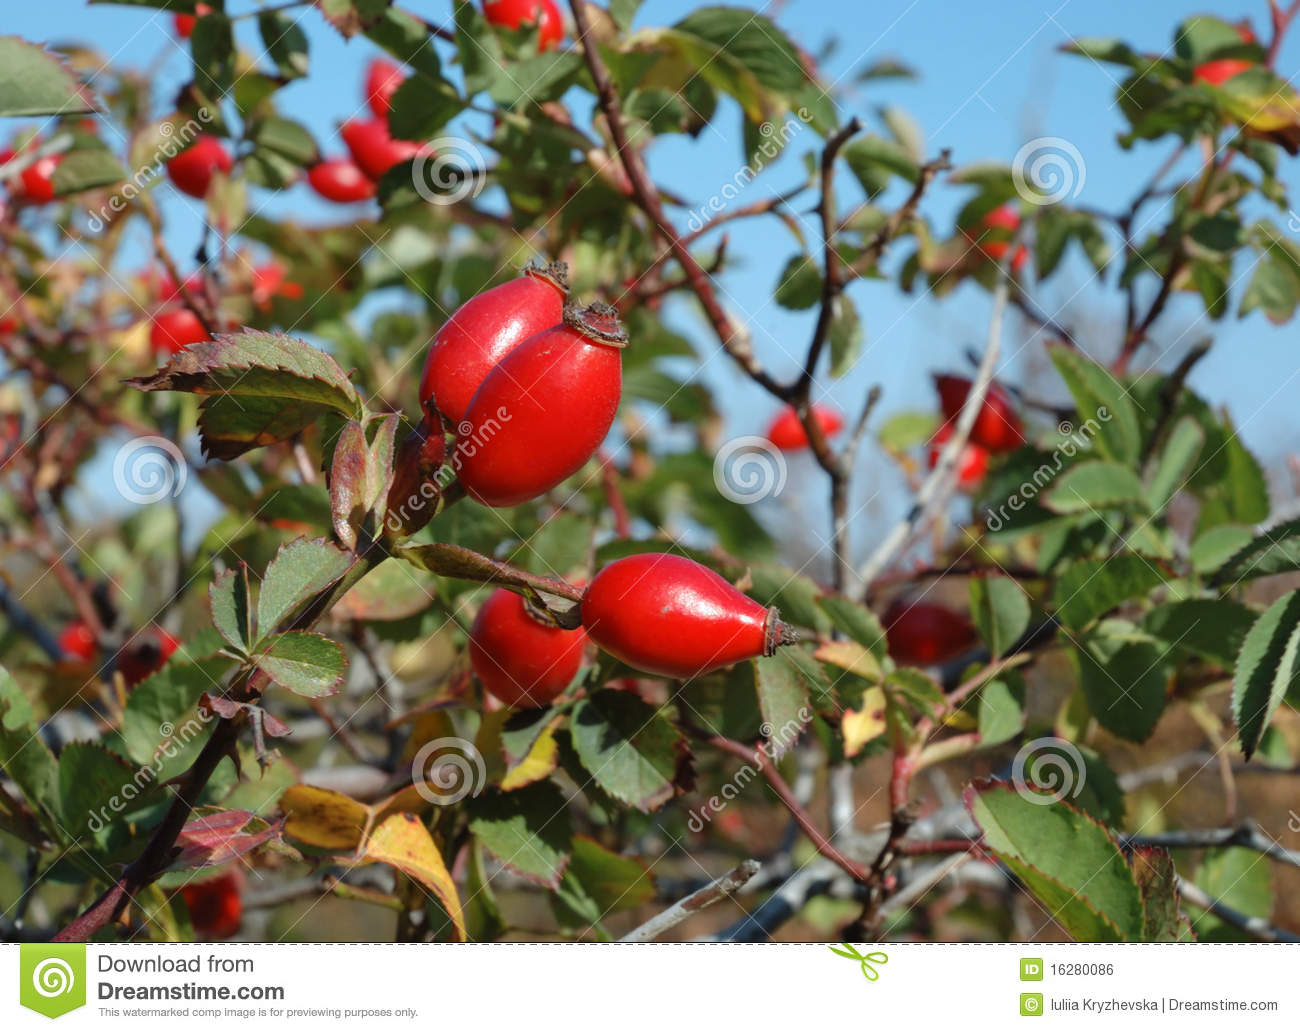 Healing Autumnal Dog Rose Red Fruits Royalty Free Stock Image   Image